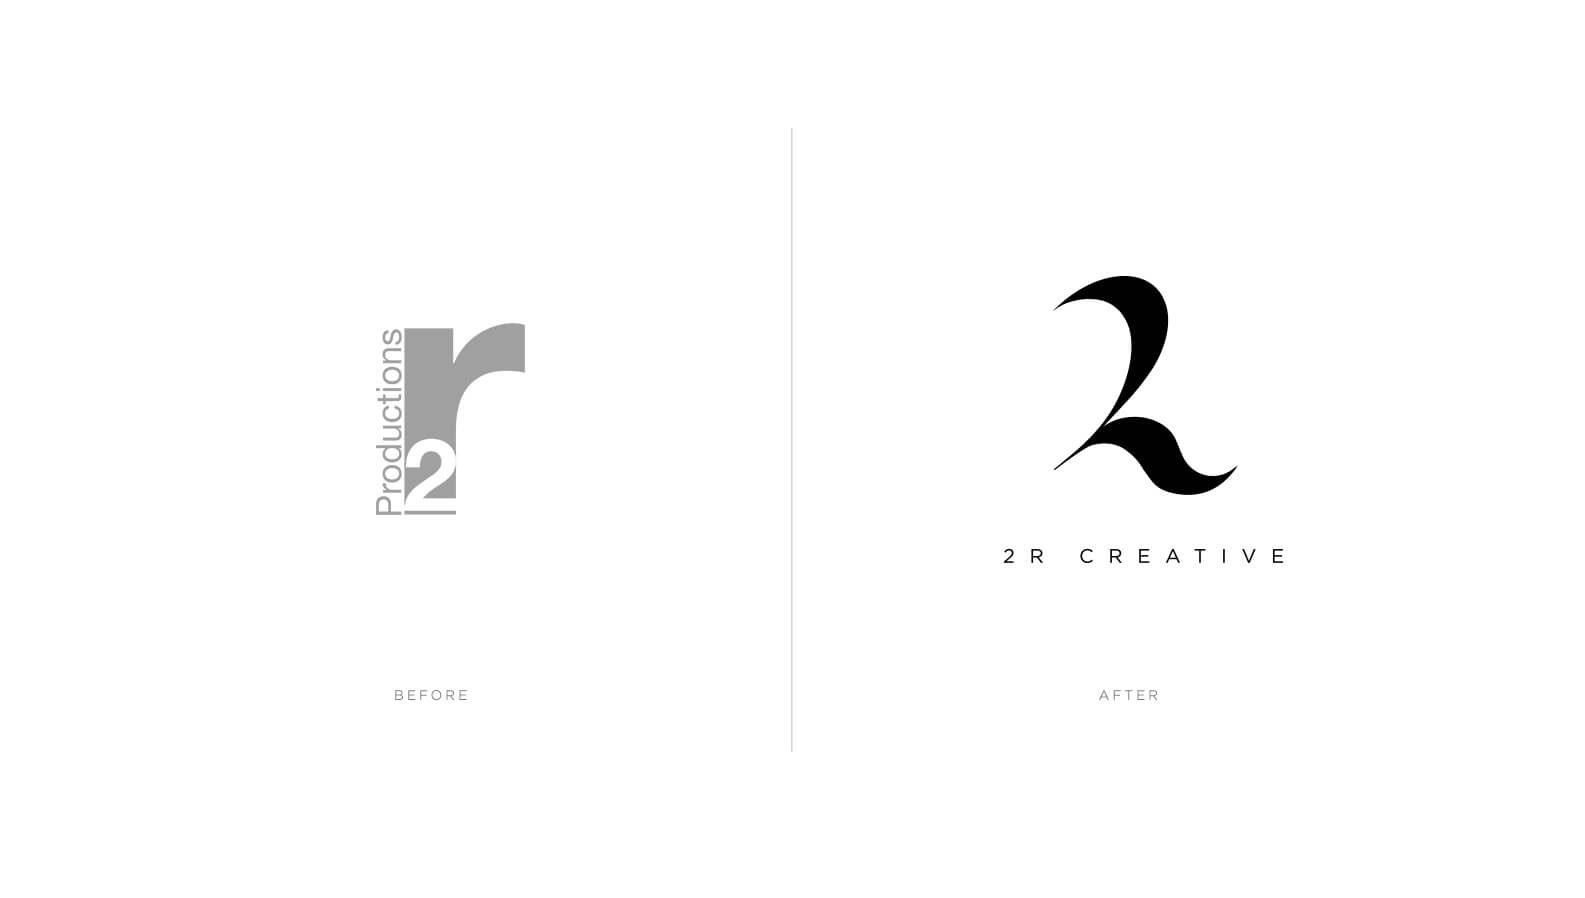 2R Creative logo rebrand by Jacober Creative